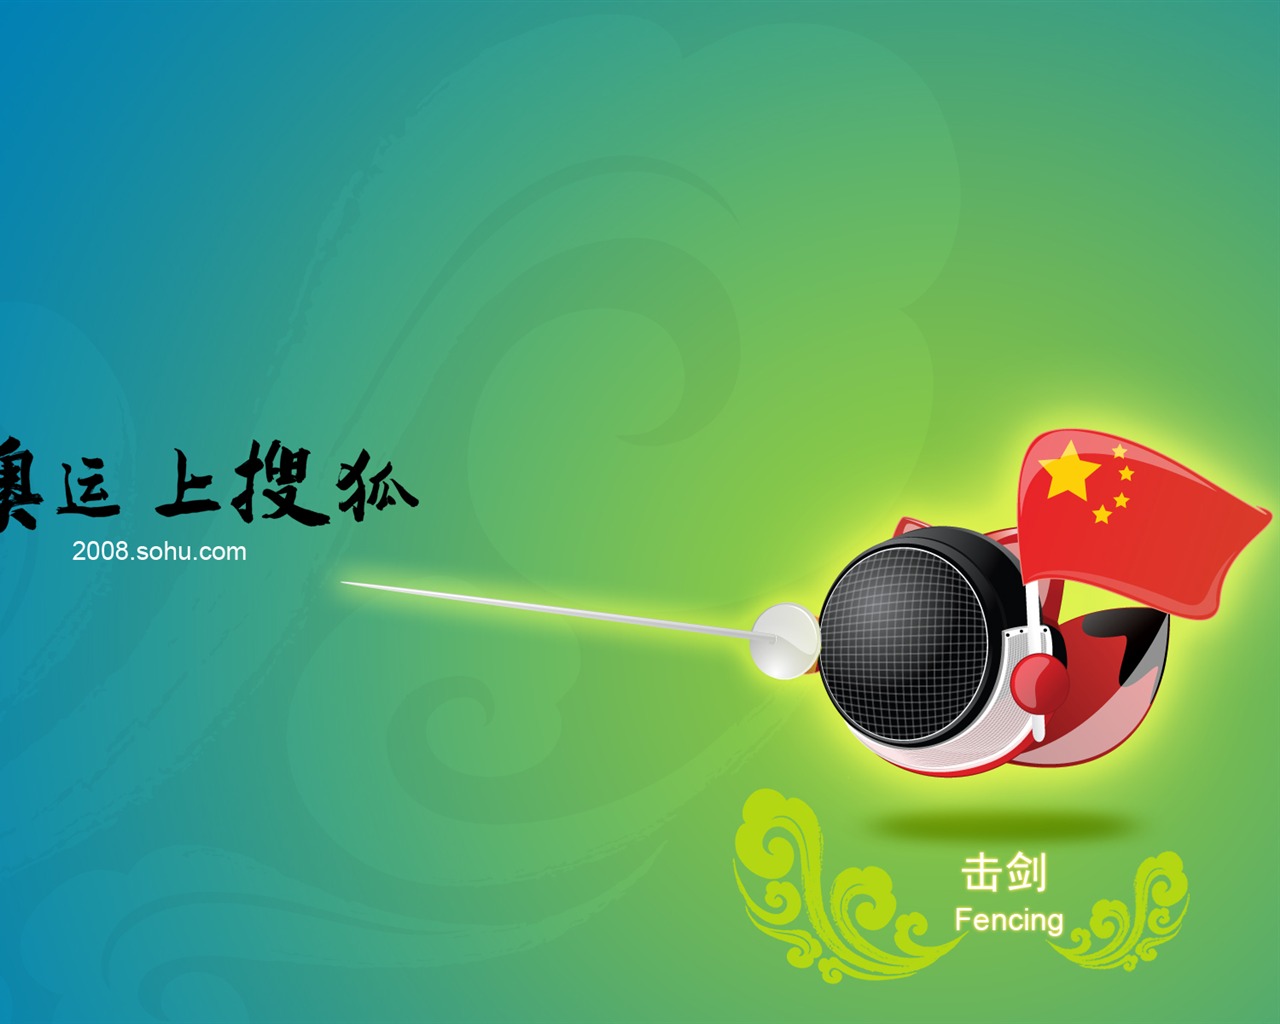 Sohu Olympic sports style wallpaper #19 - 1280x1024